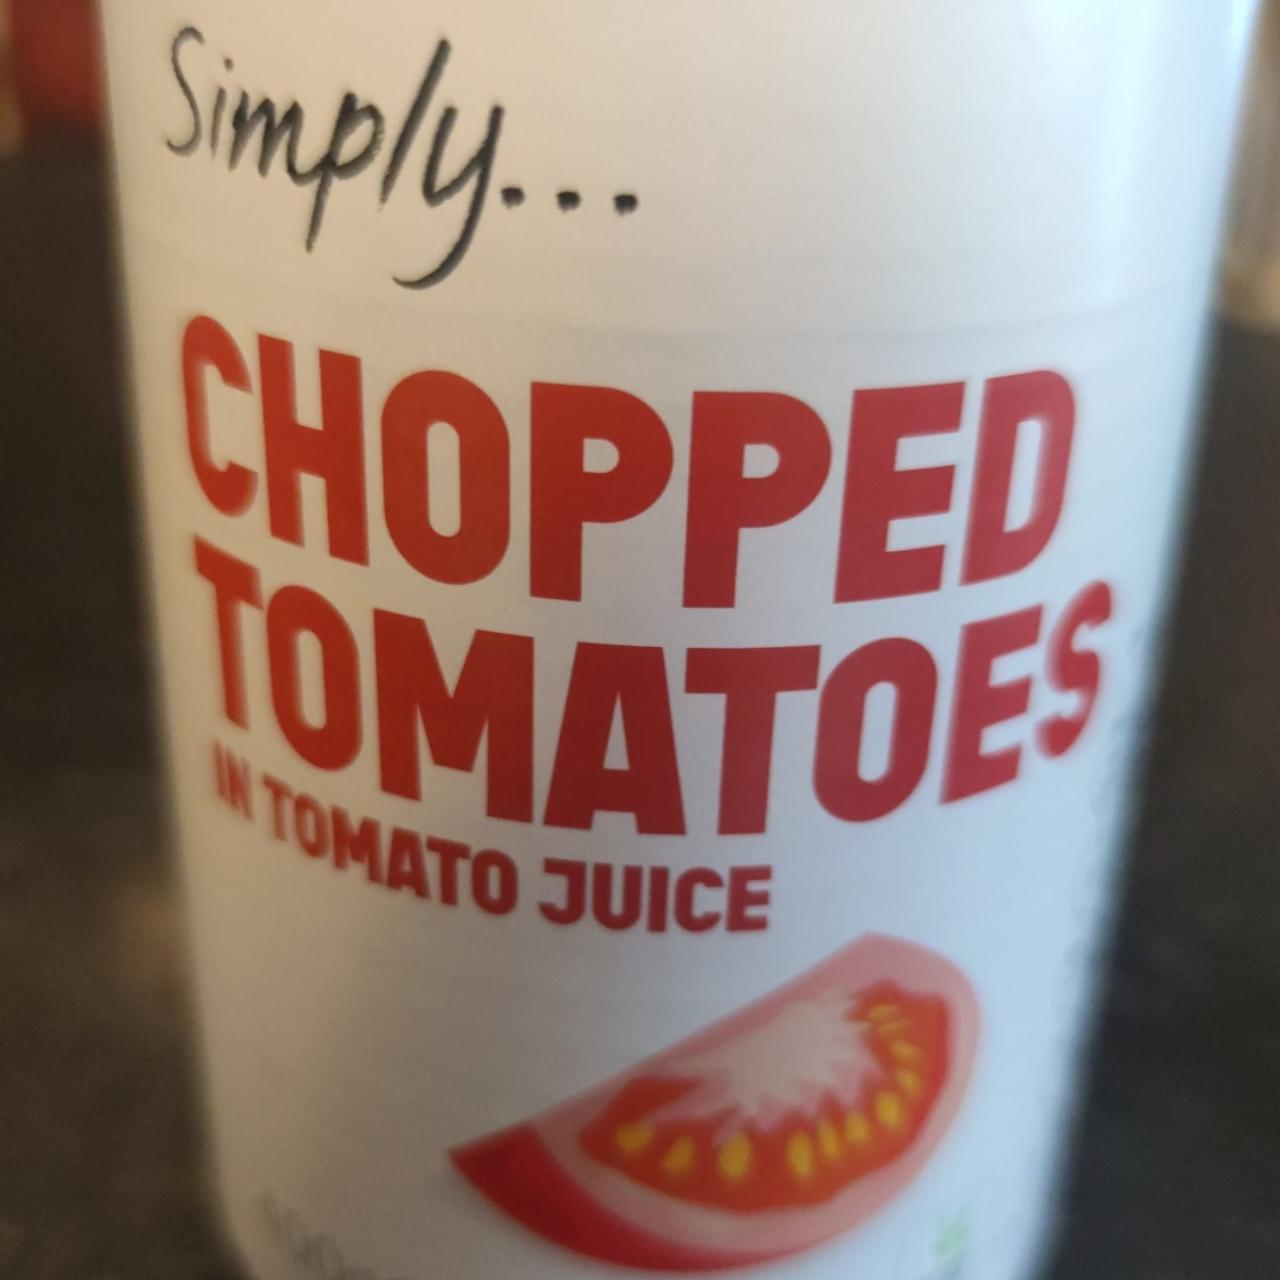 Zdjęcia - chopped tomatoes lidl Simply